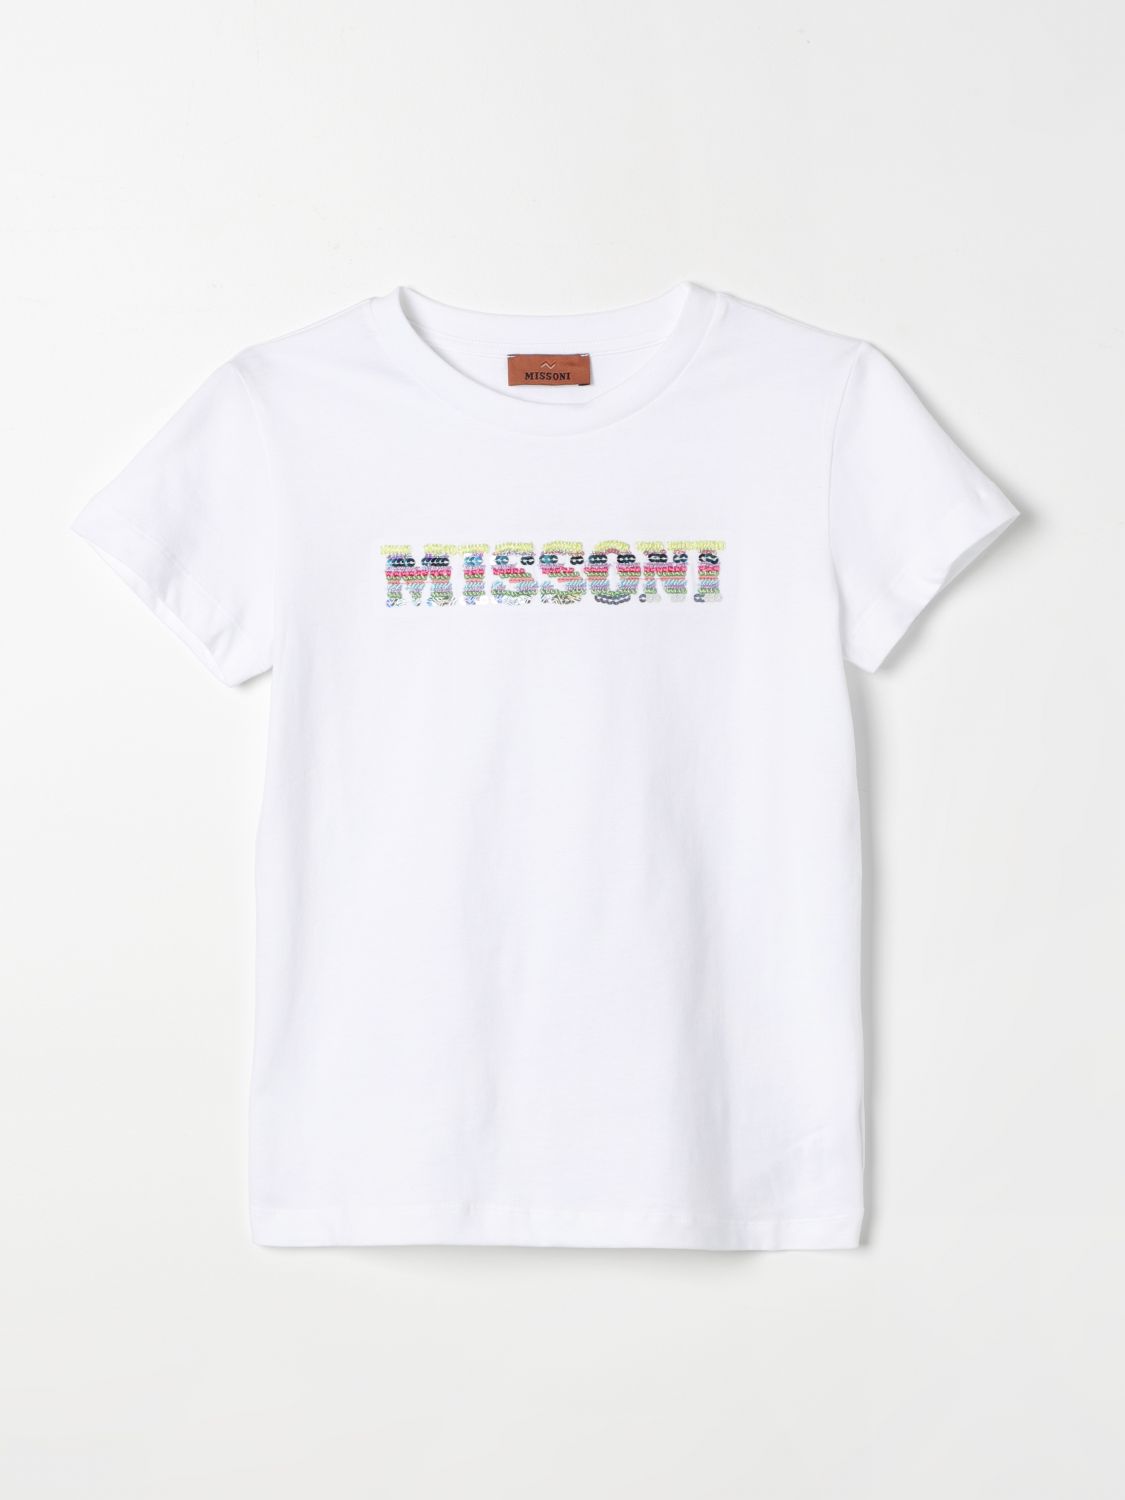 Shop Missoni T-shirt  Kids Kids Color White